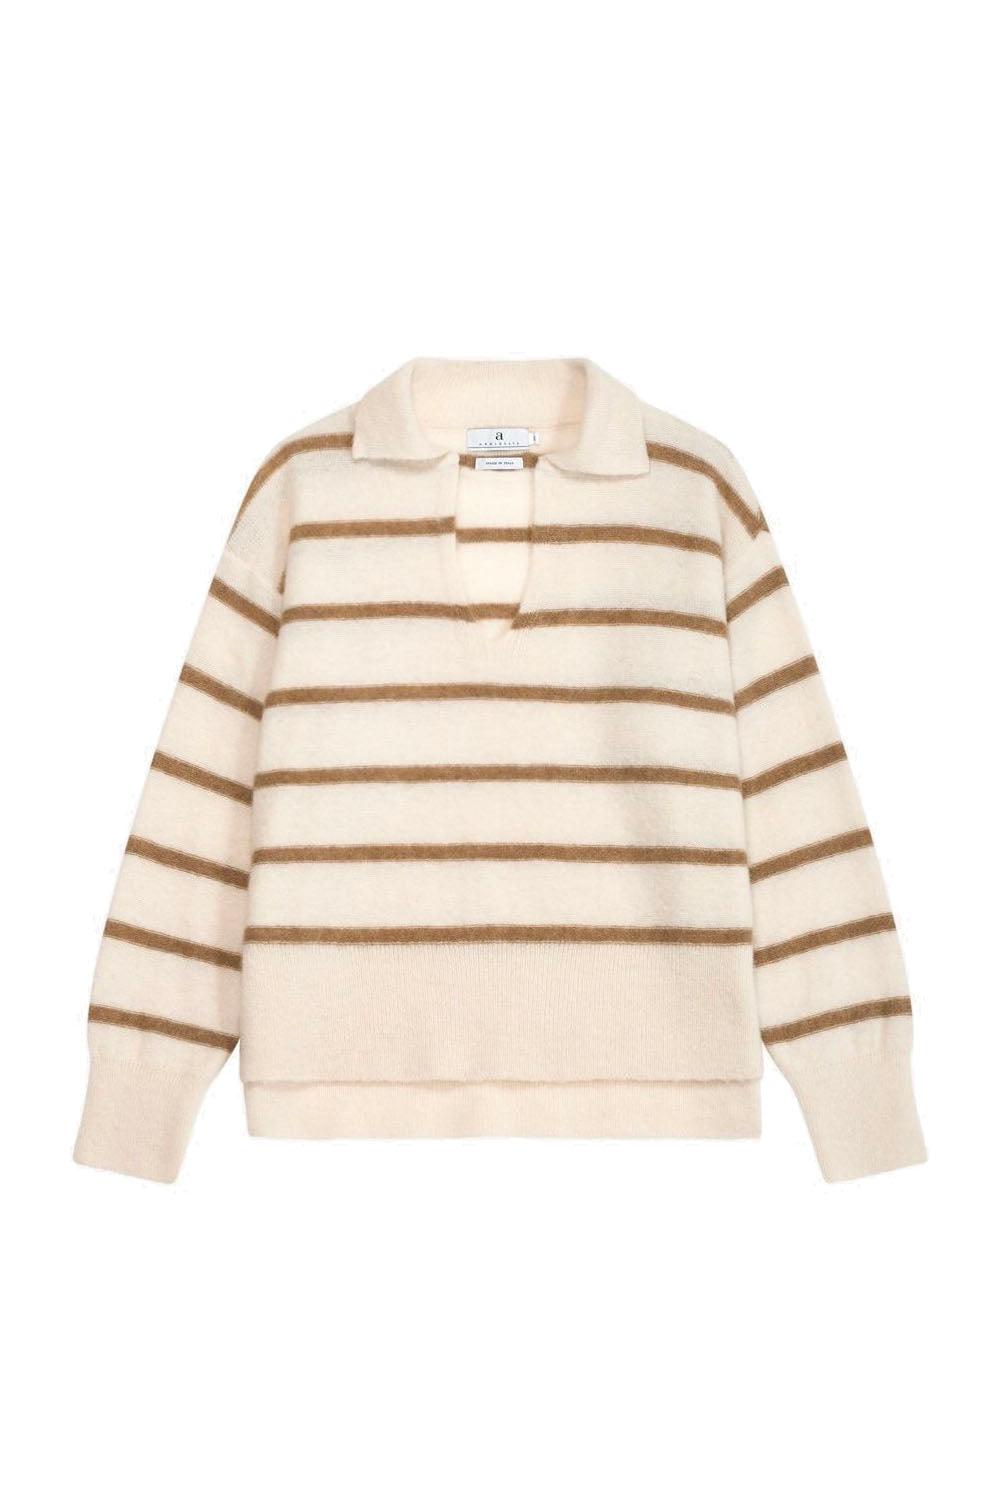 Lowry Stripe Sweater Offwhite Combo